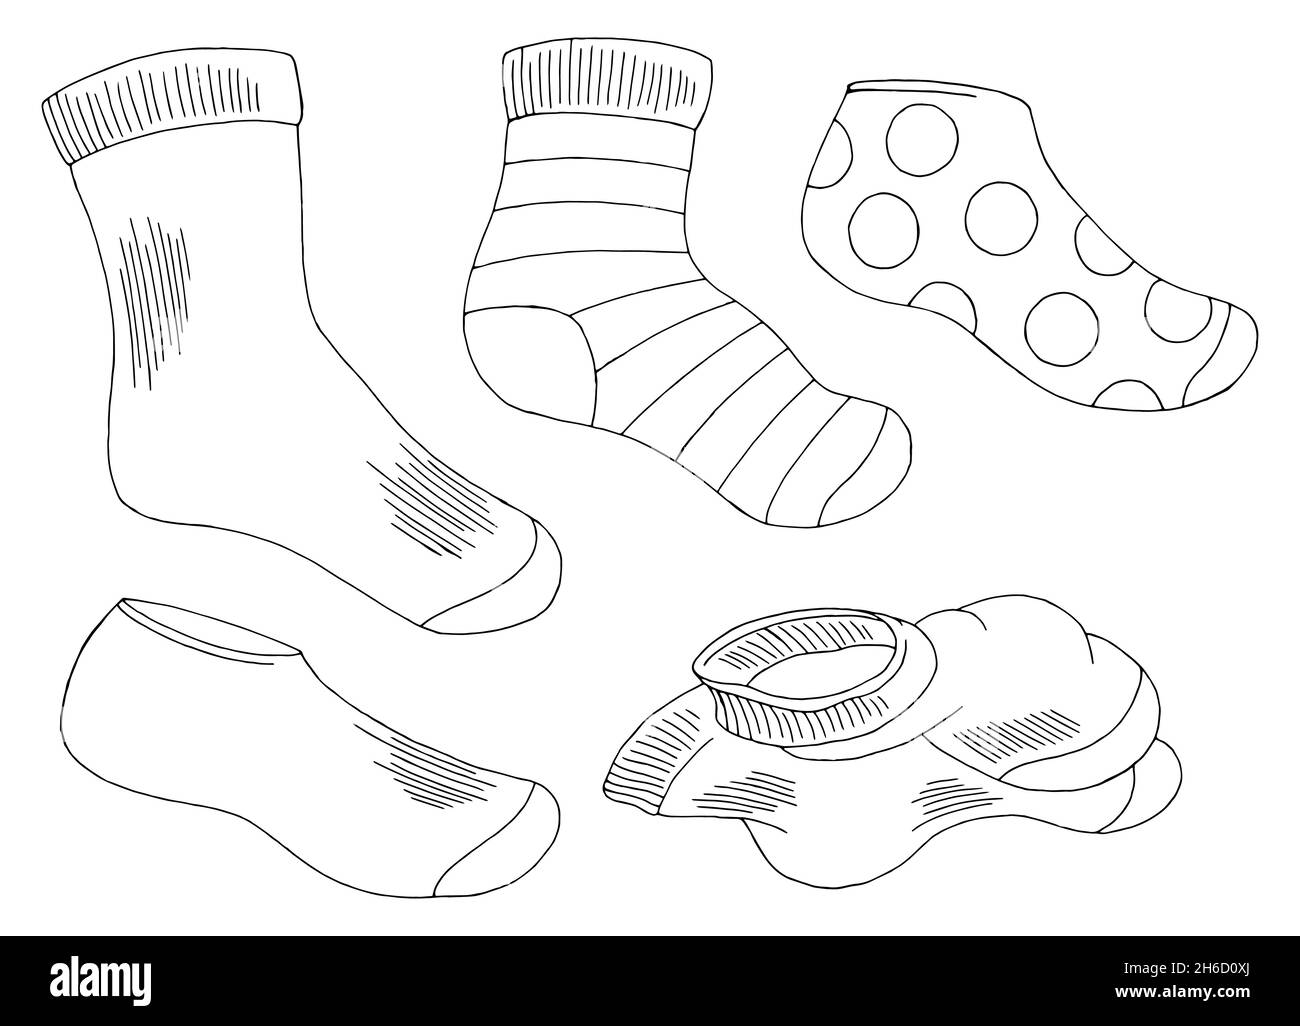 Socks set graphic black white isolated sketch illustration vector Stock ...